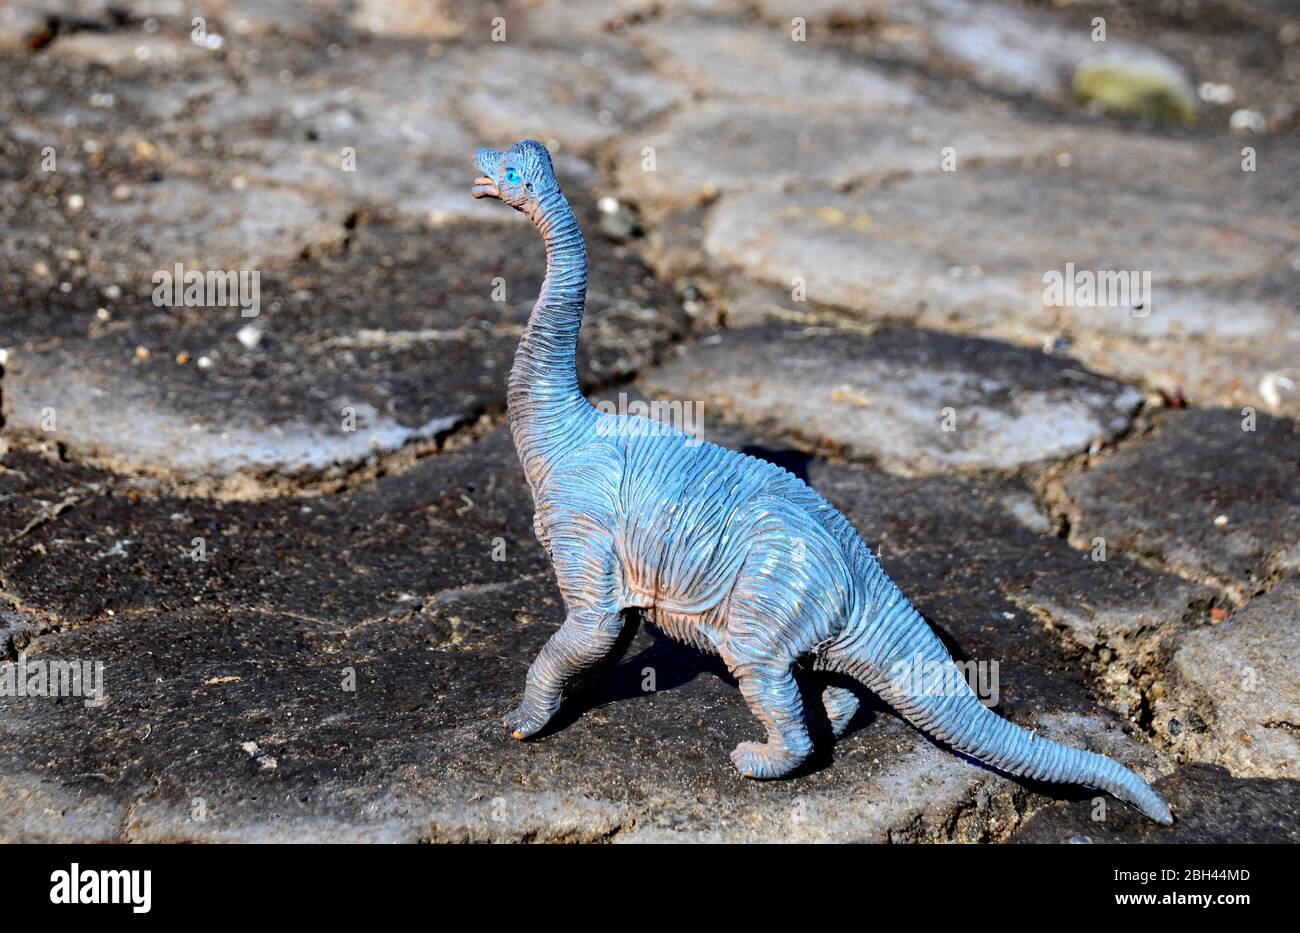 réplica de dinosaurio de juguete en un entorno natural al aire libre. Foto de stock